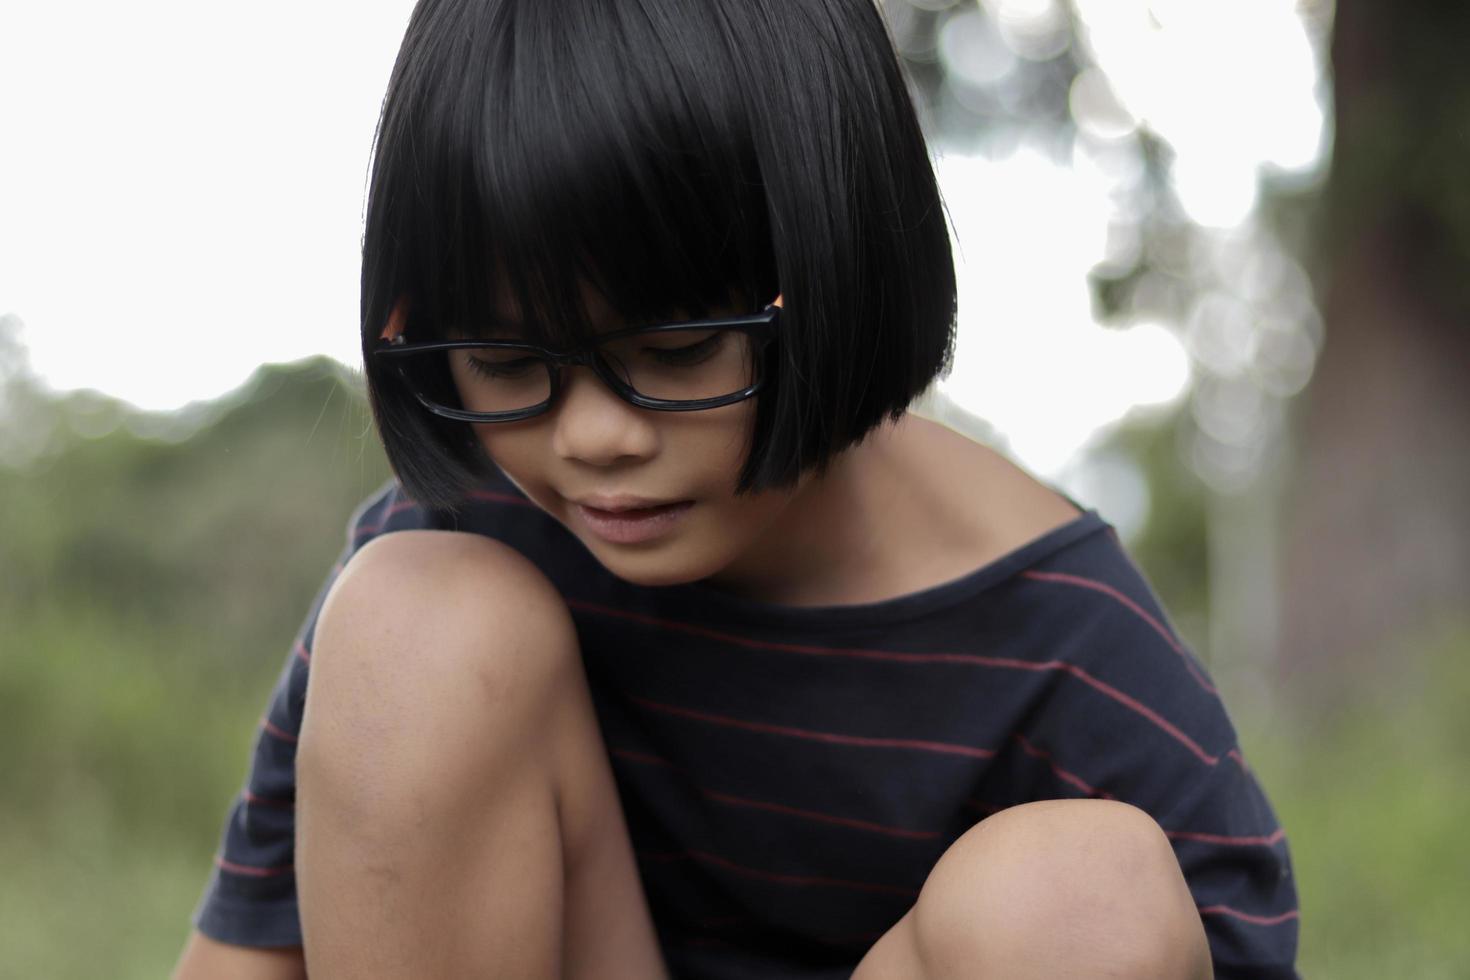 Portrait of child wearing eyeglasses photo